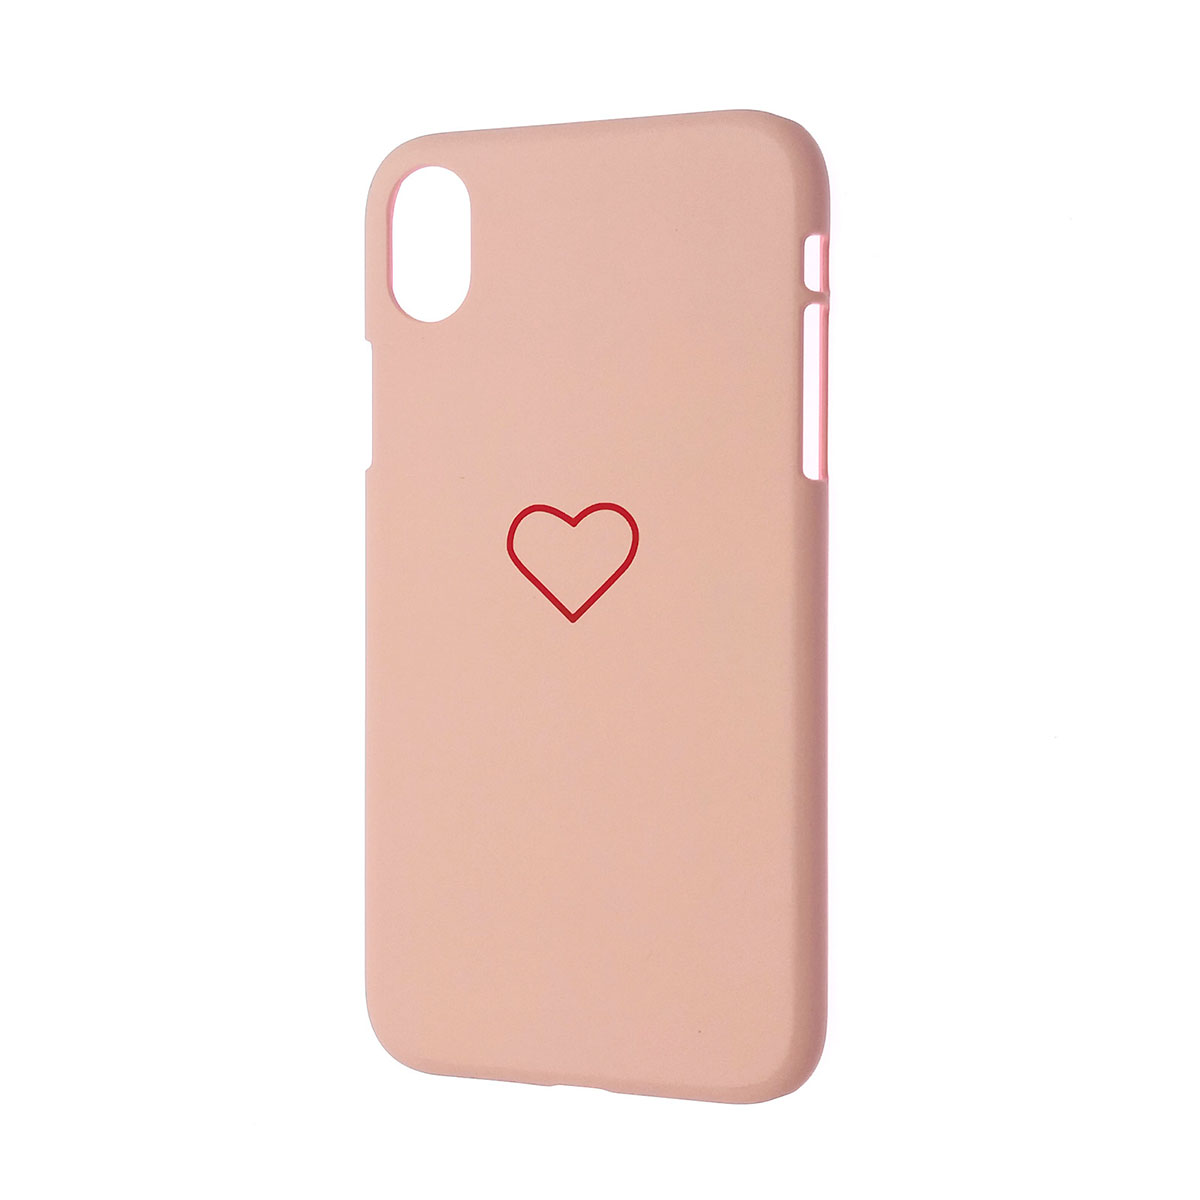 Чехол накладка для APPLE iPhone XR, пластик, матовый, рисунок Сердце, цвет розовый.